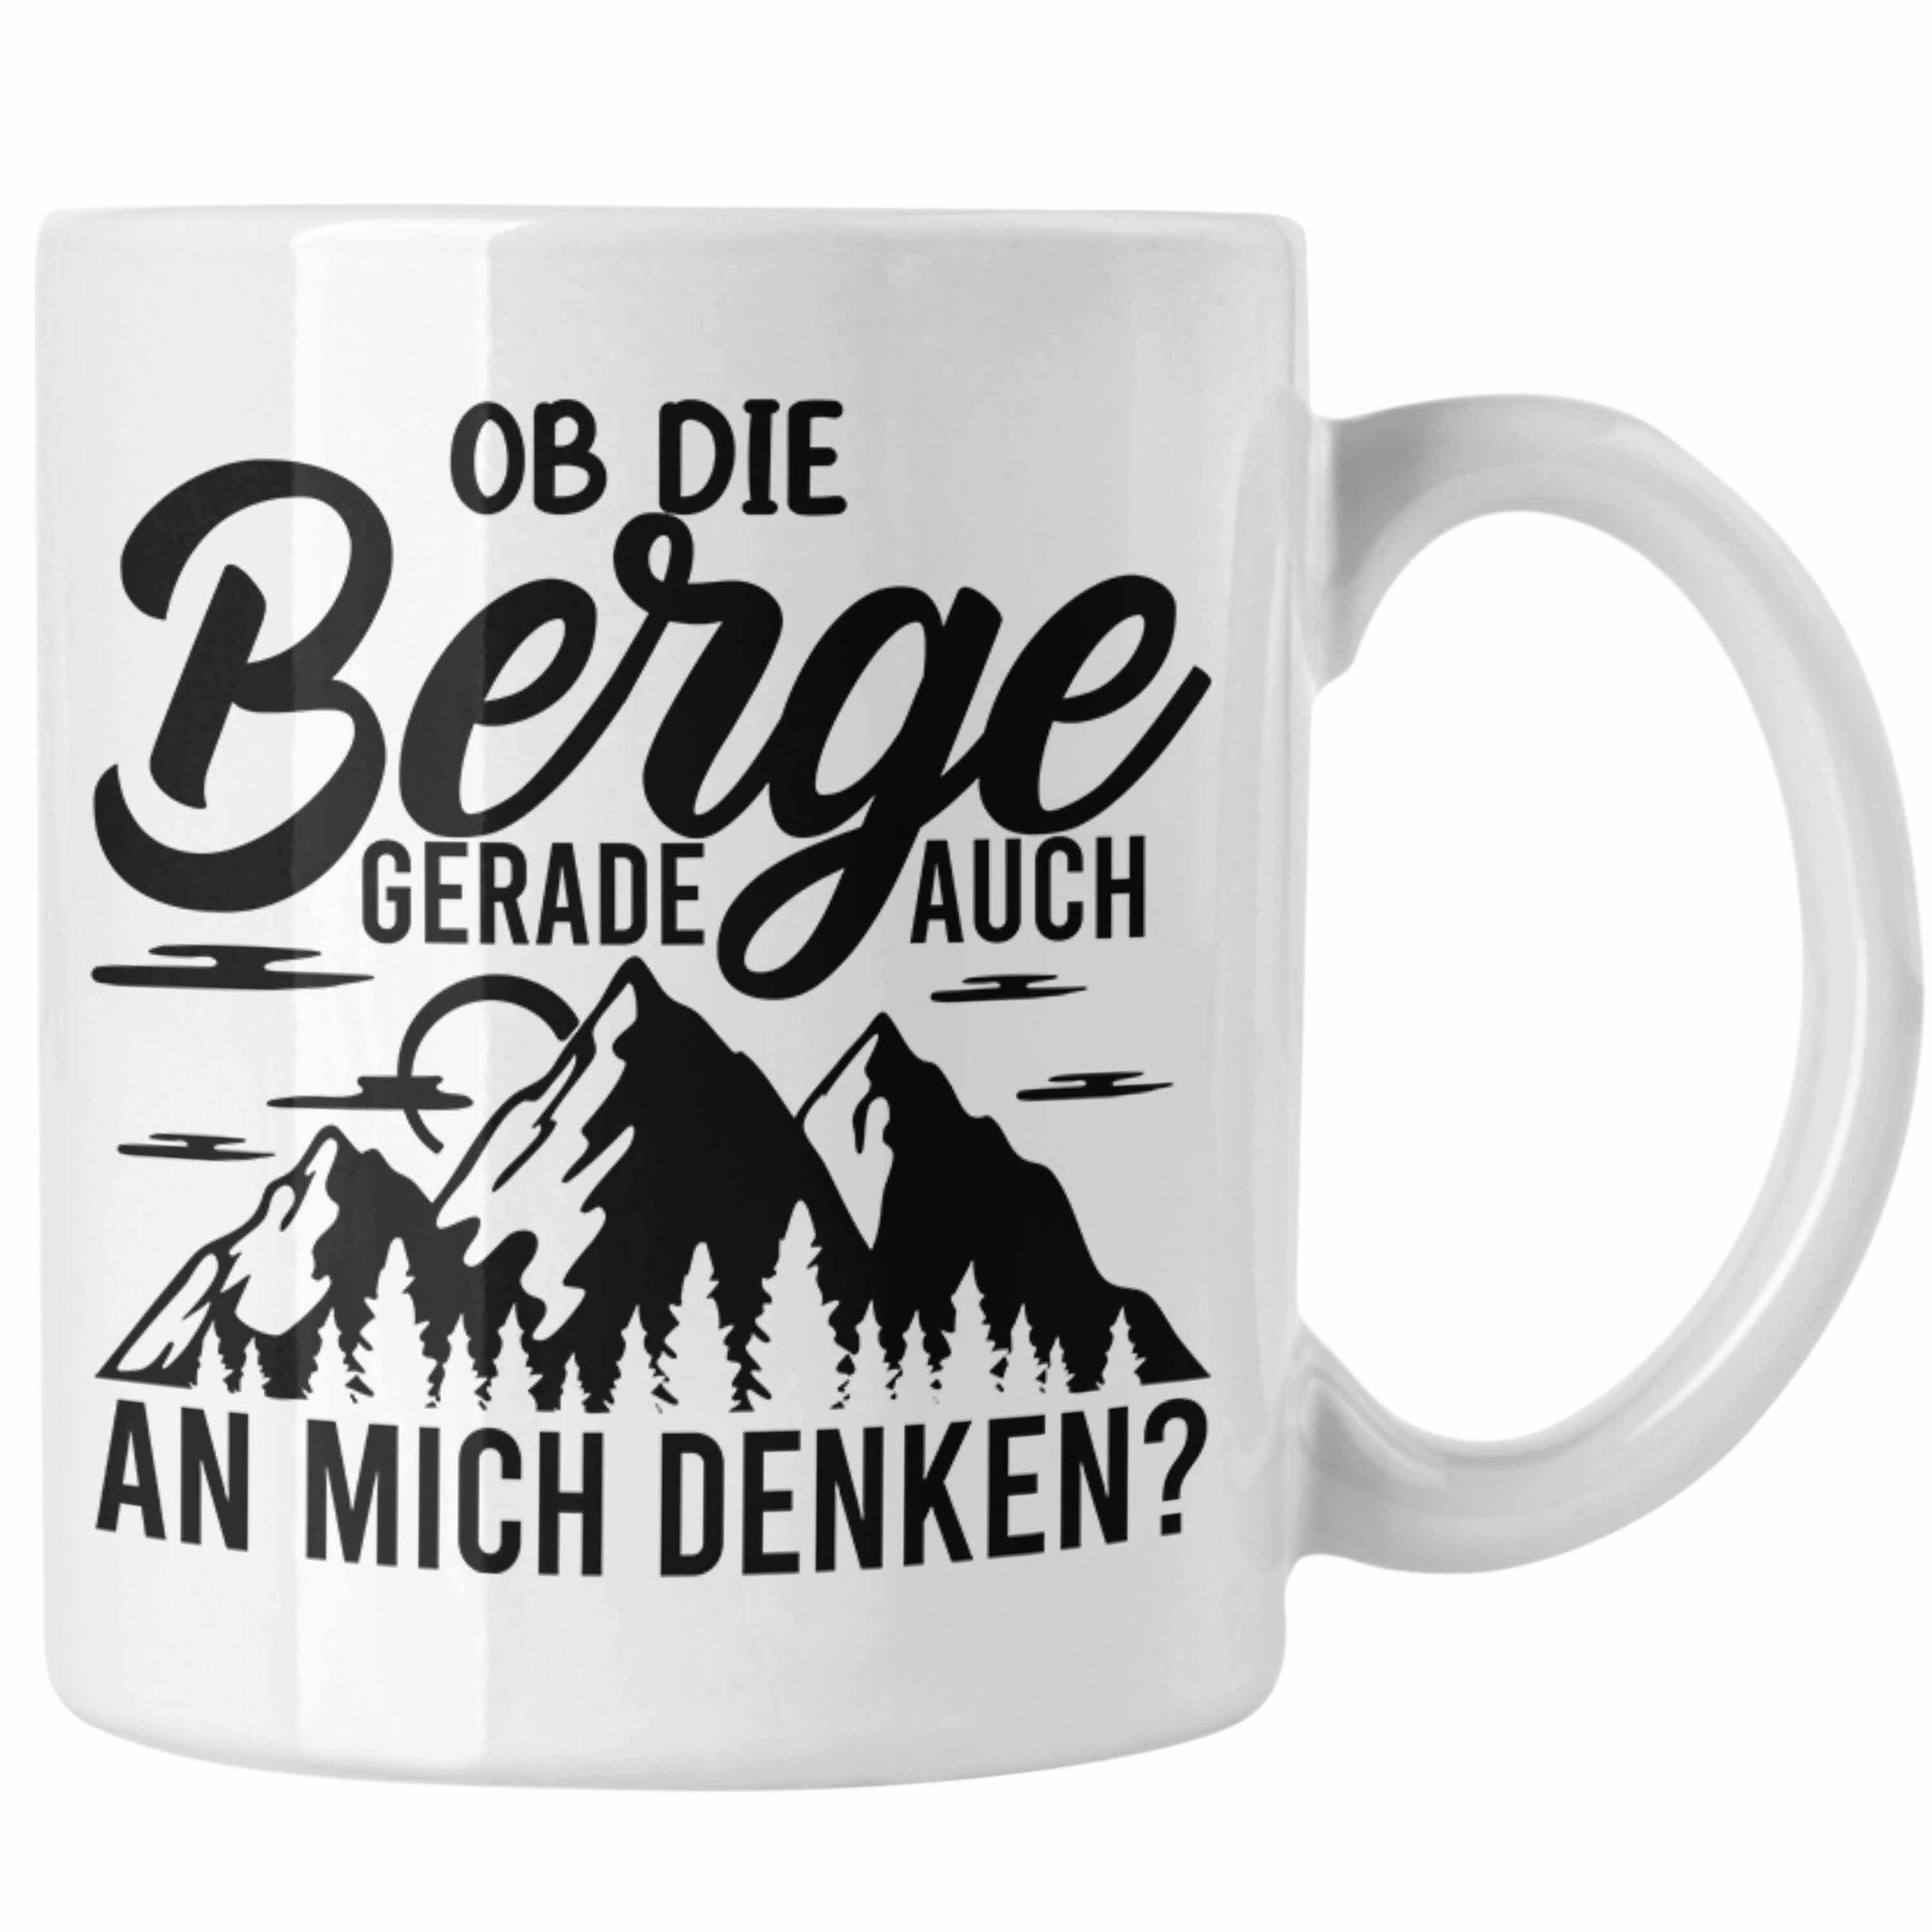 Wandern Mich Die - Ob Trendation Wanderer Alpen Berge Geschenke Trendation Geschenk Tasse Tasse Denken Berge Weiss Auch An Geschenkidee